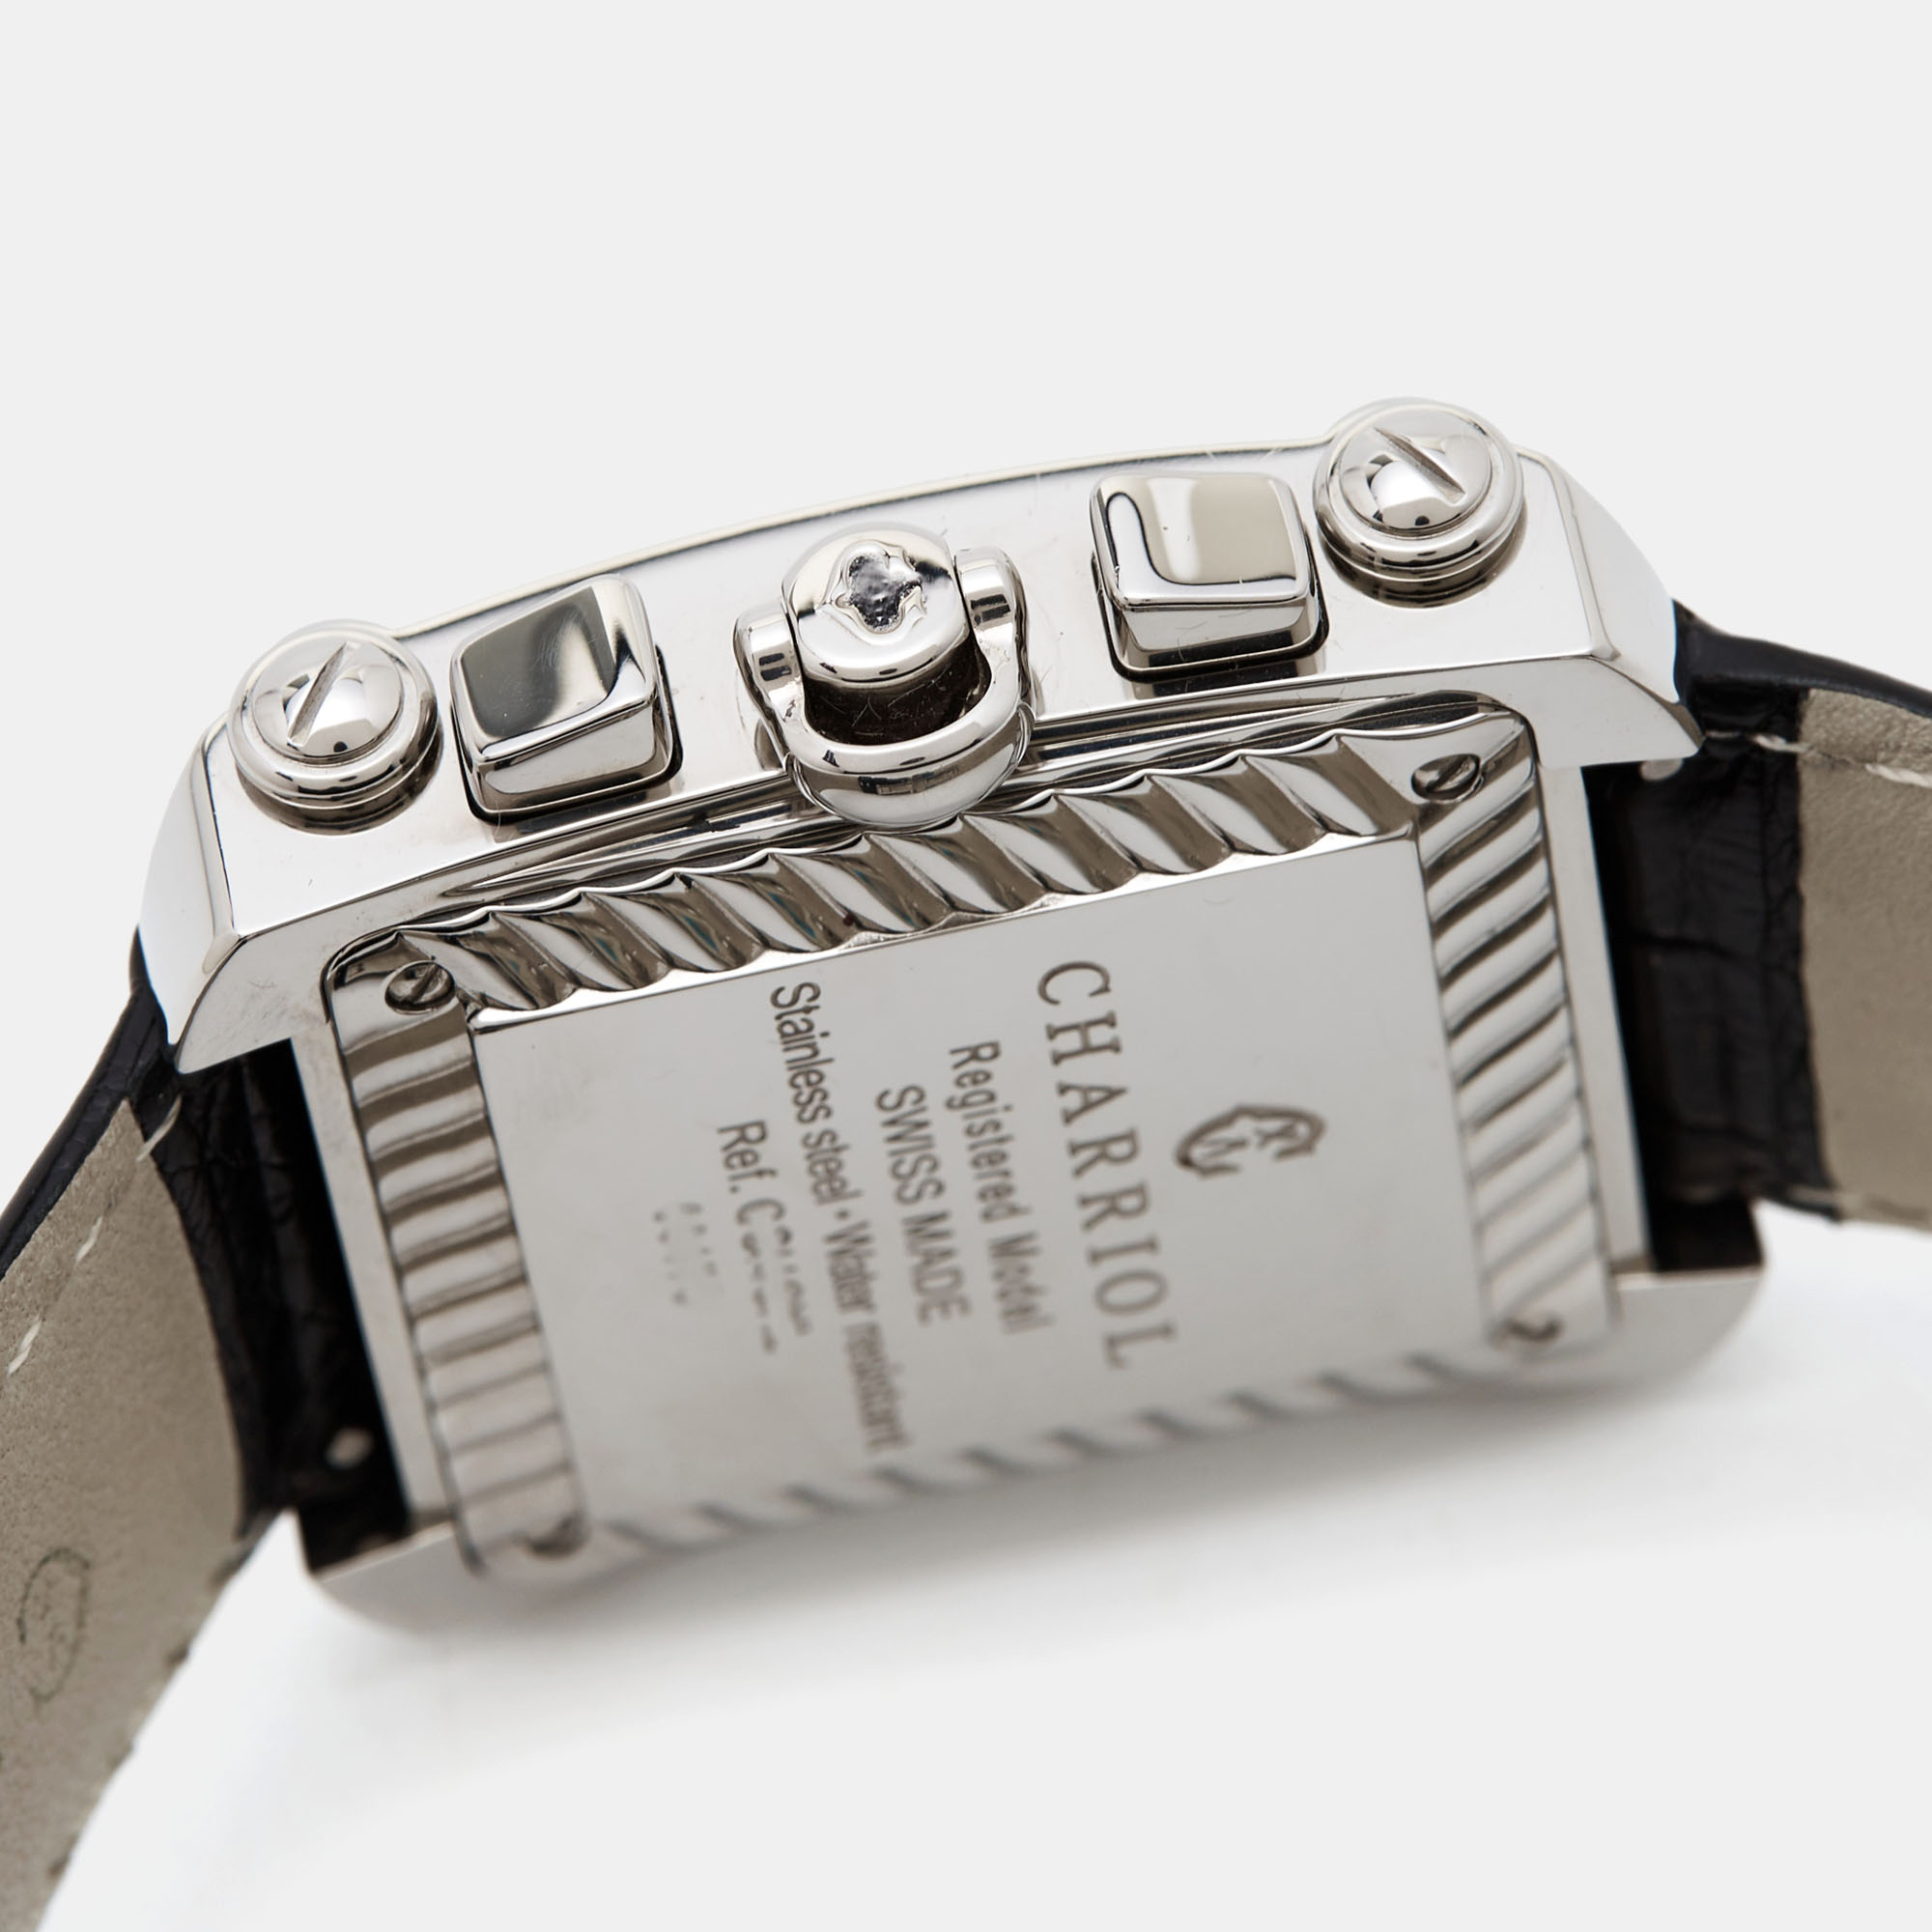 Charriol Silver Stainless Steel Crocodile Leather Actor Ref. CCHCXL Men's Wristwatch 35 Mm